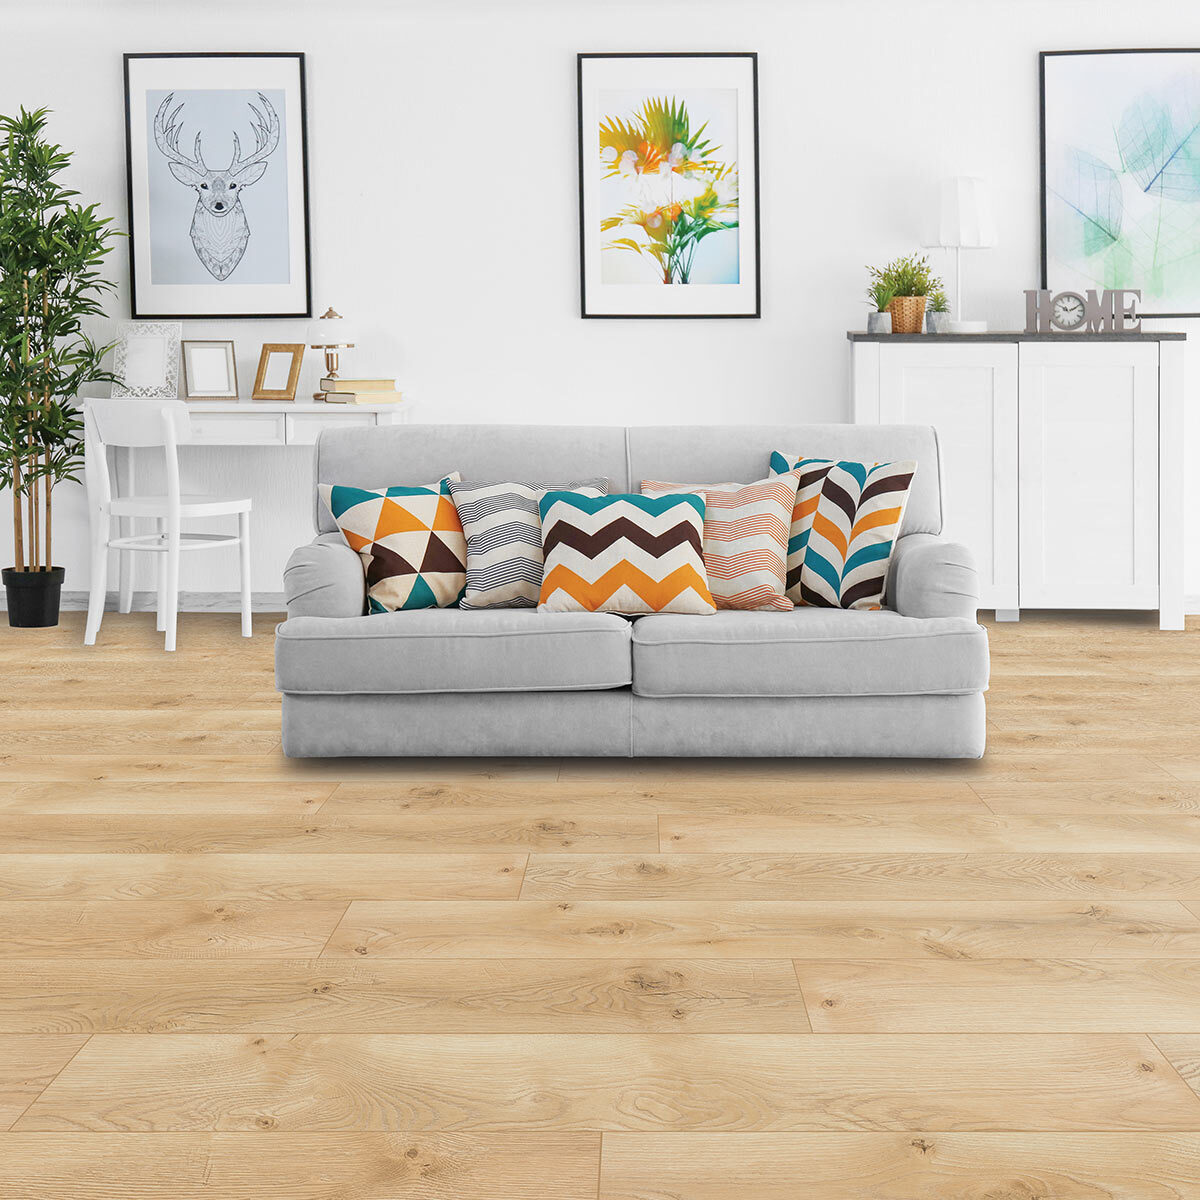 Ac5 Laminate Flooring, Costco Laminate Flooring Reviews Uk